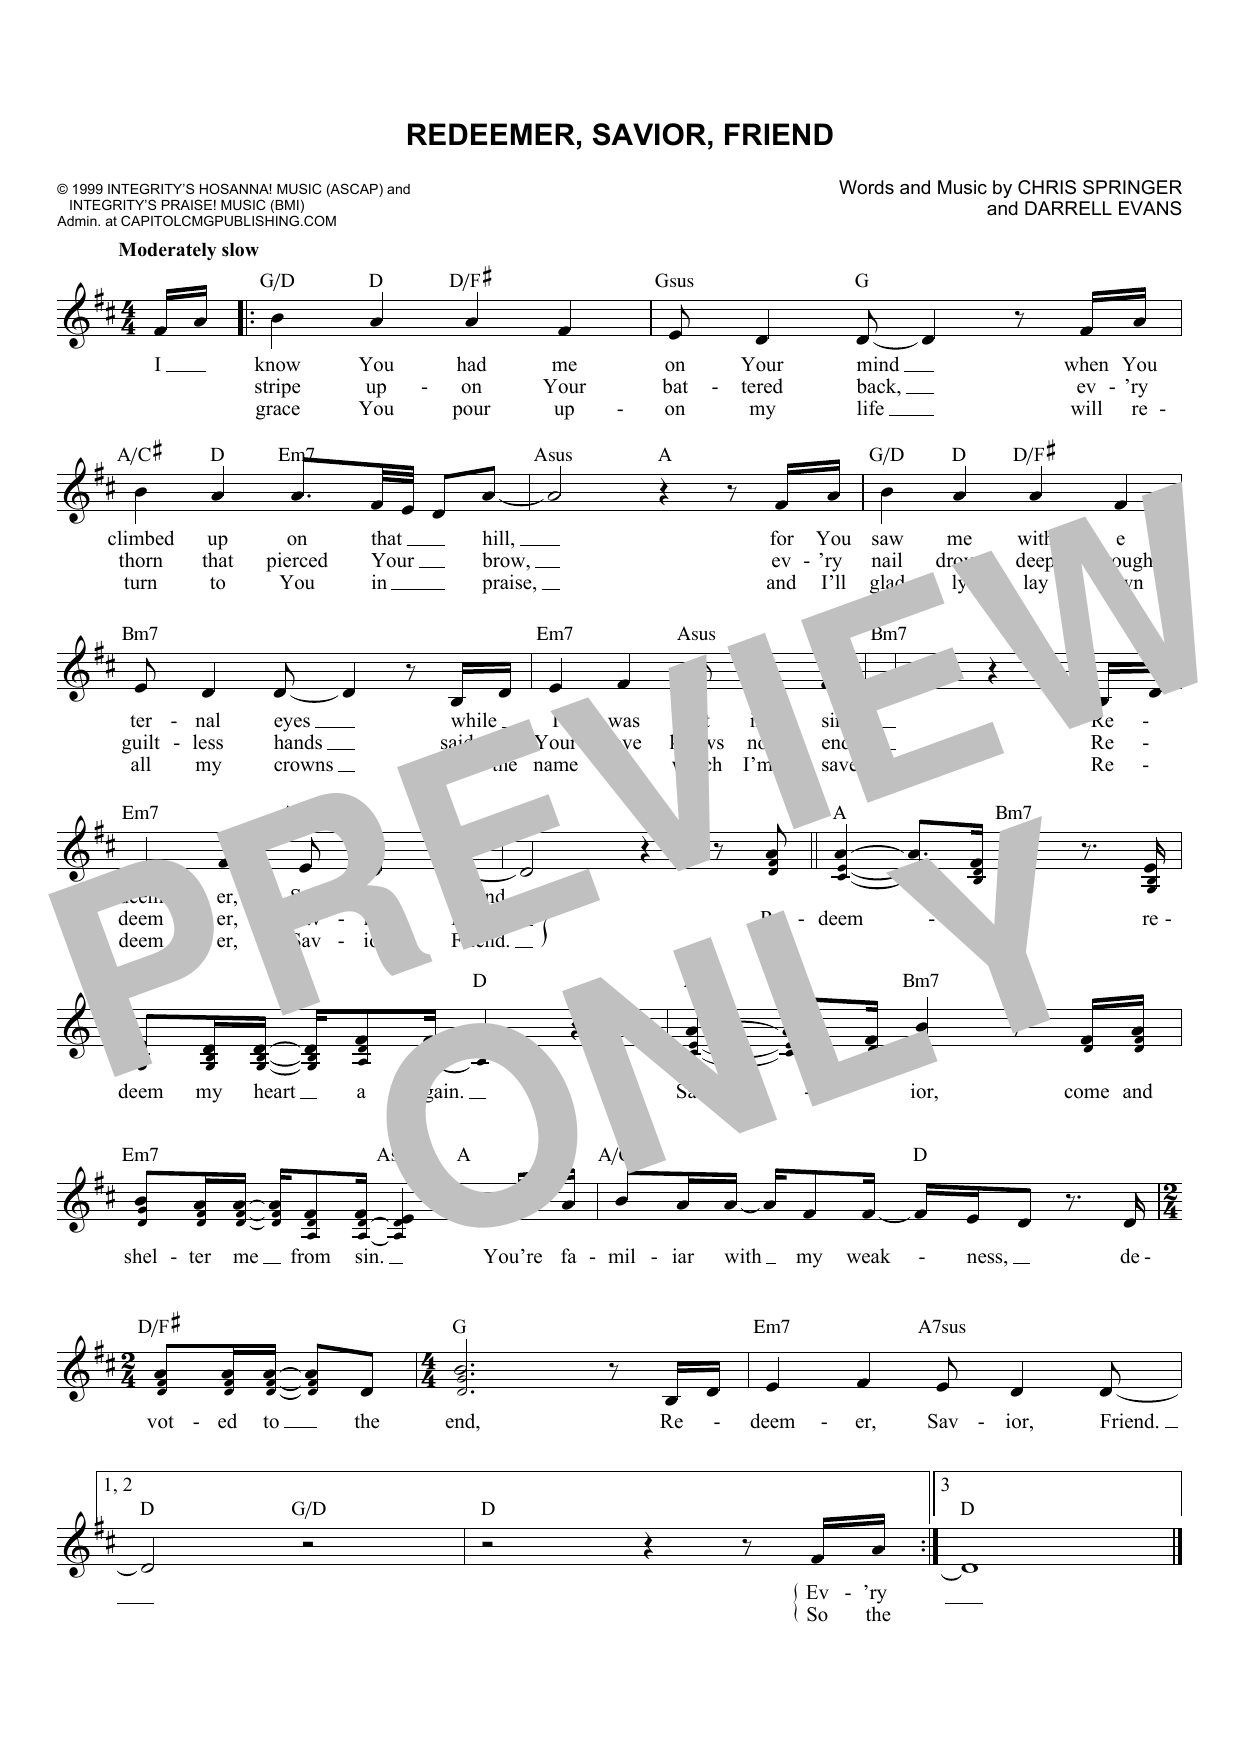 Chris Springer Redeemer, Savior, Friend Sheet Music Notes & Chords for Melody Line, Lyrics & Chords - Download or Print PDF